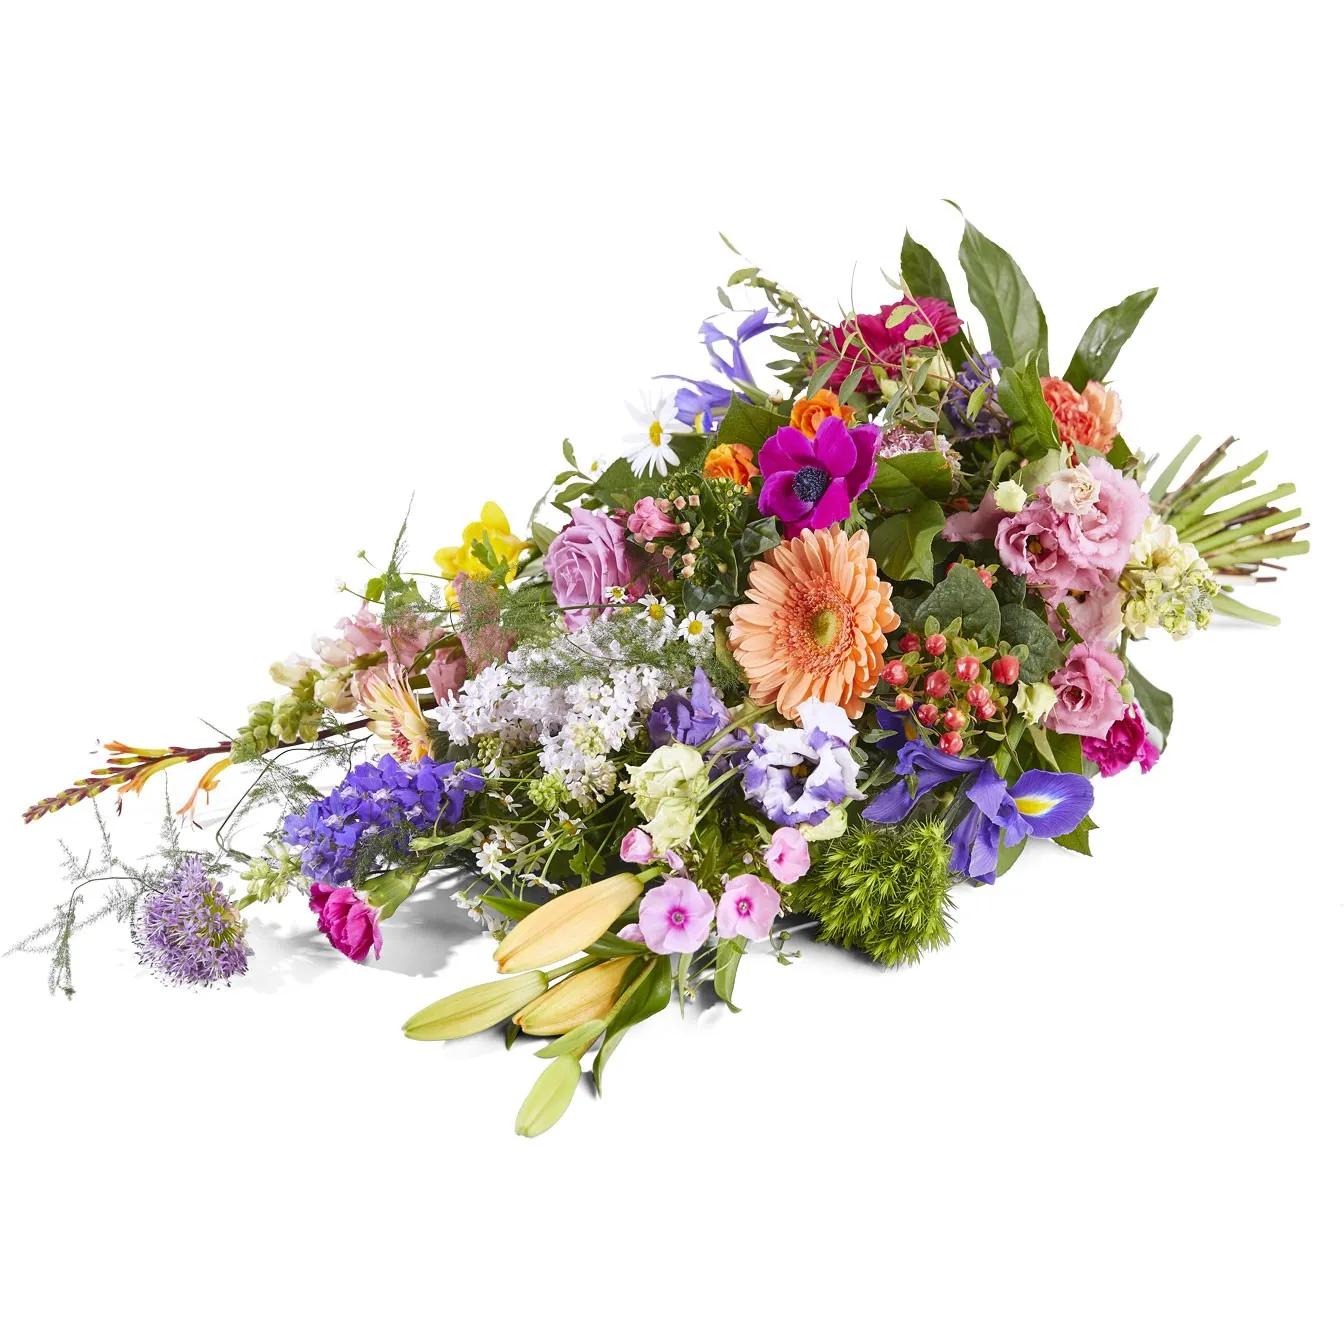 Funeral Bouquet - Precious